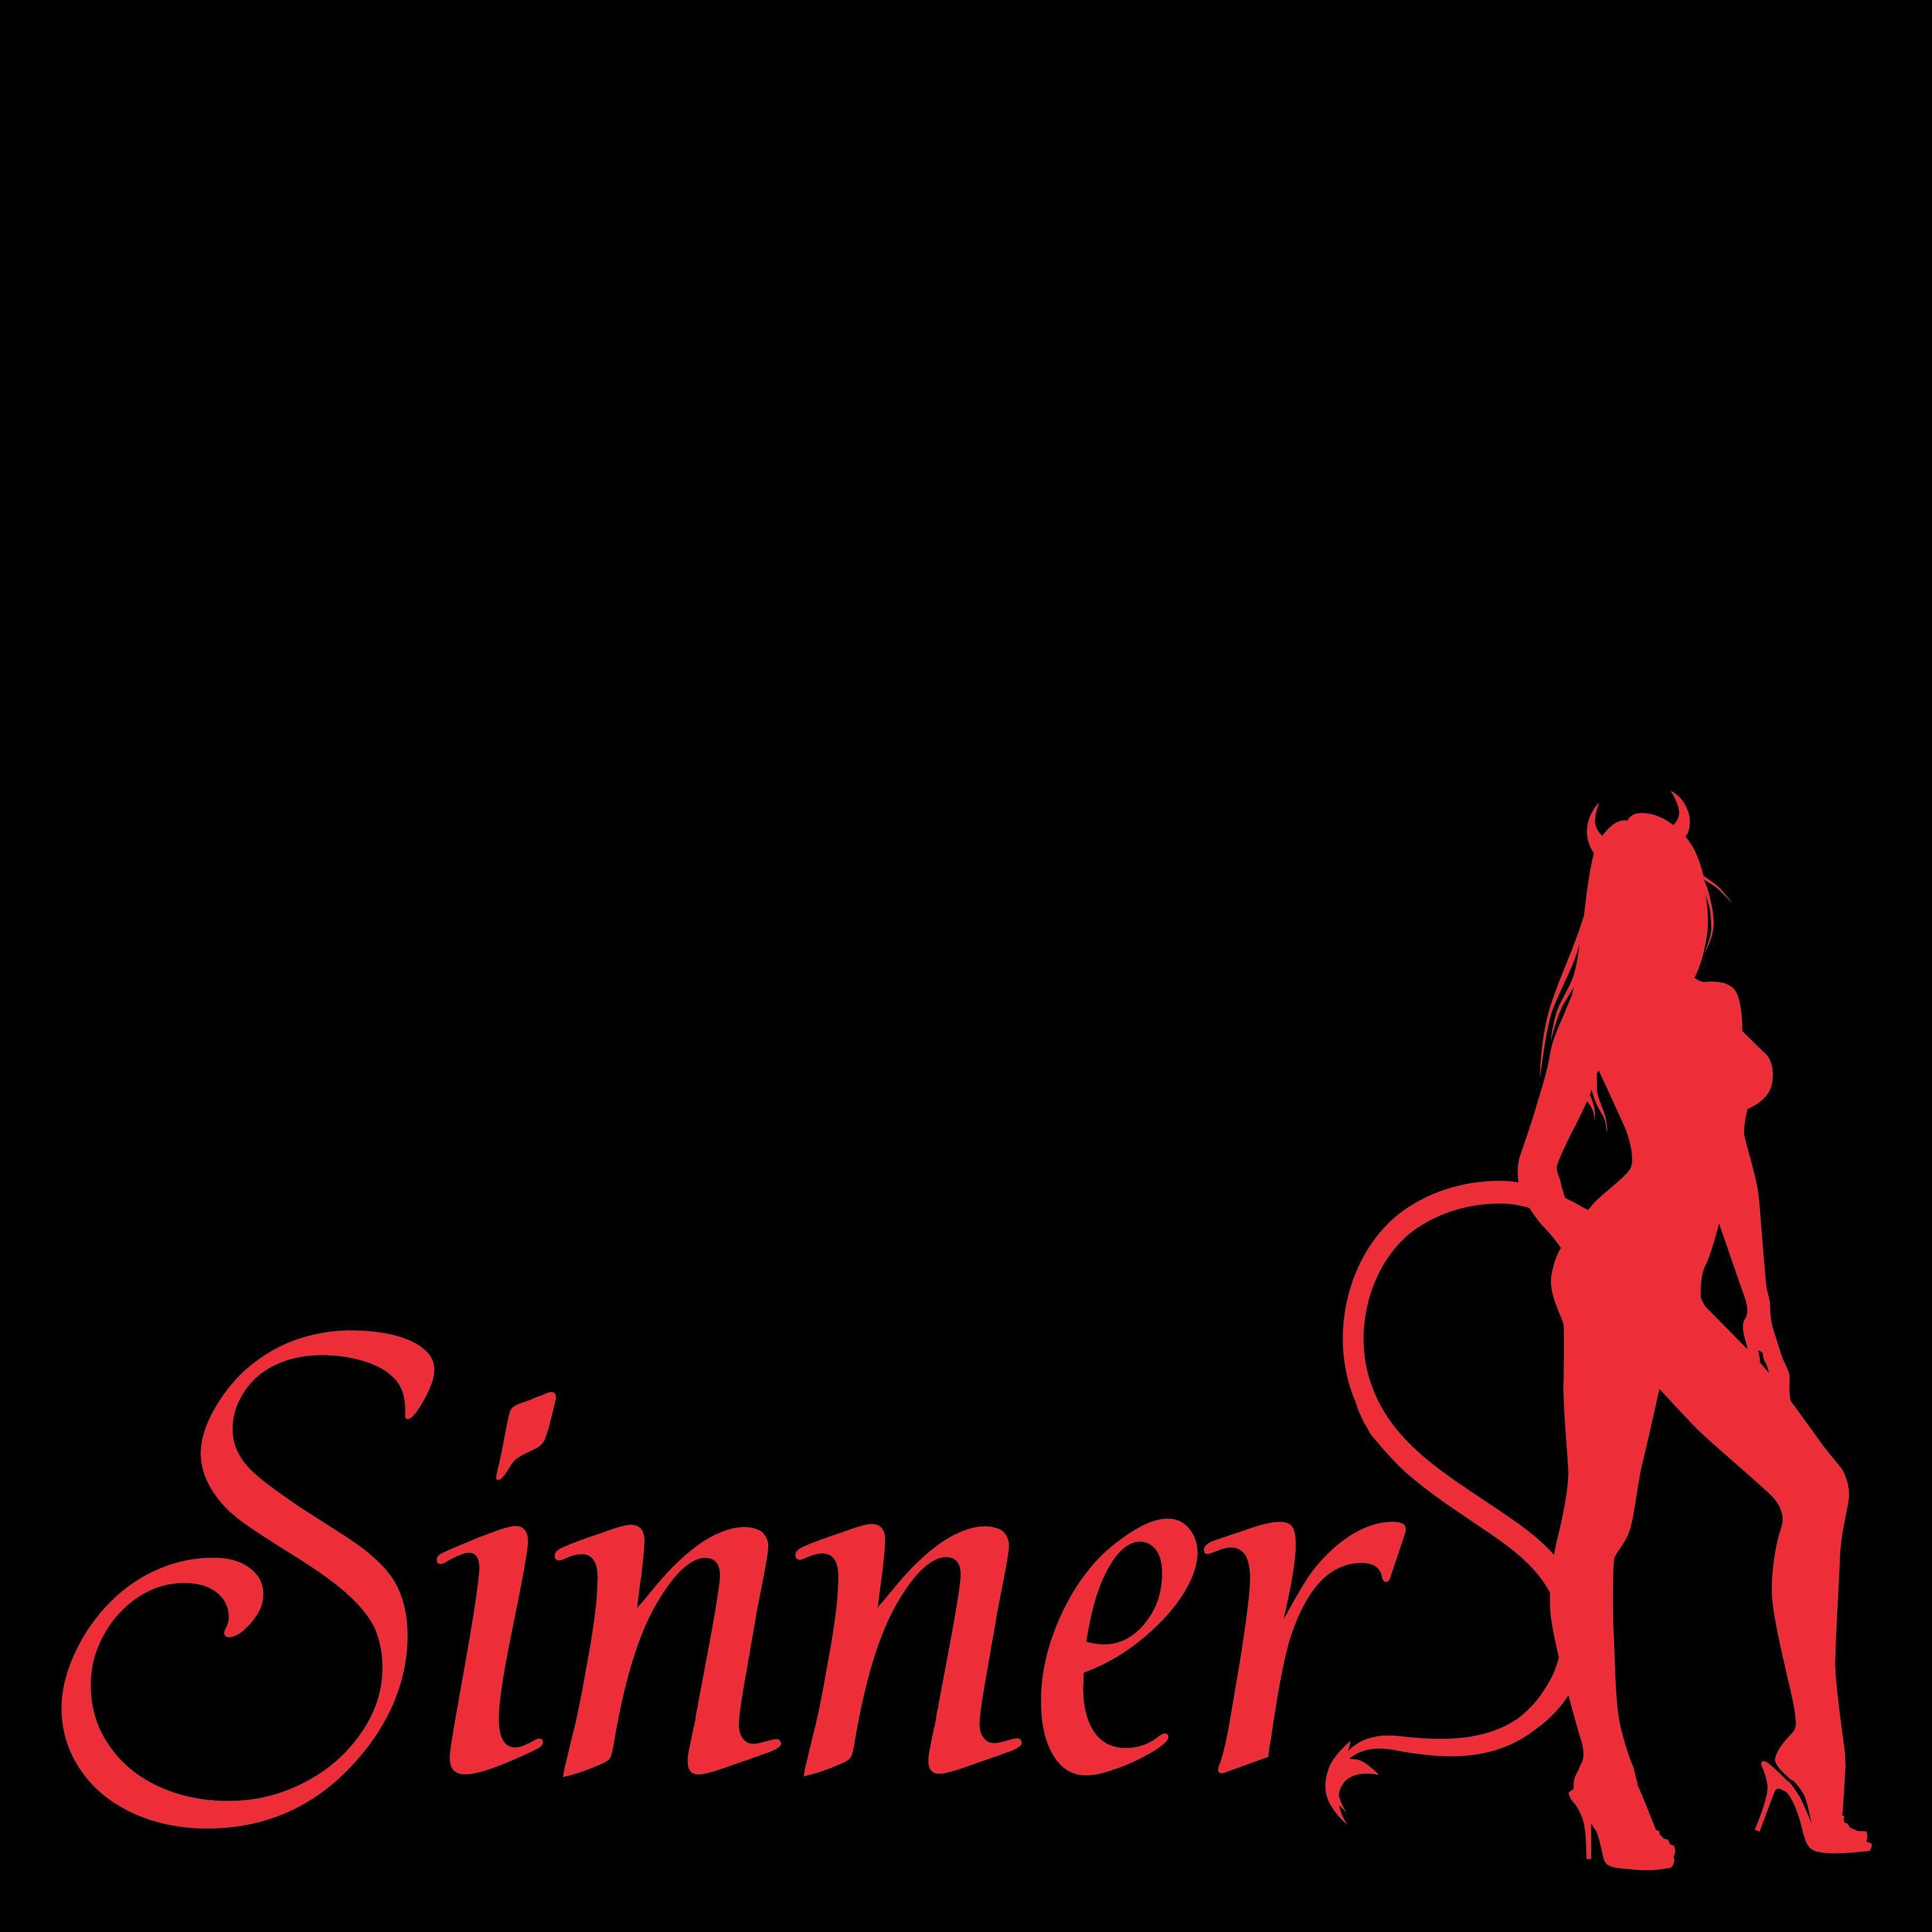 Sinner Logo - Sinners' Band Logo | Olivia Cunning's Blog